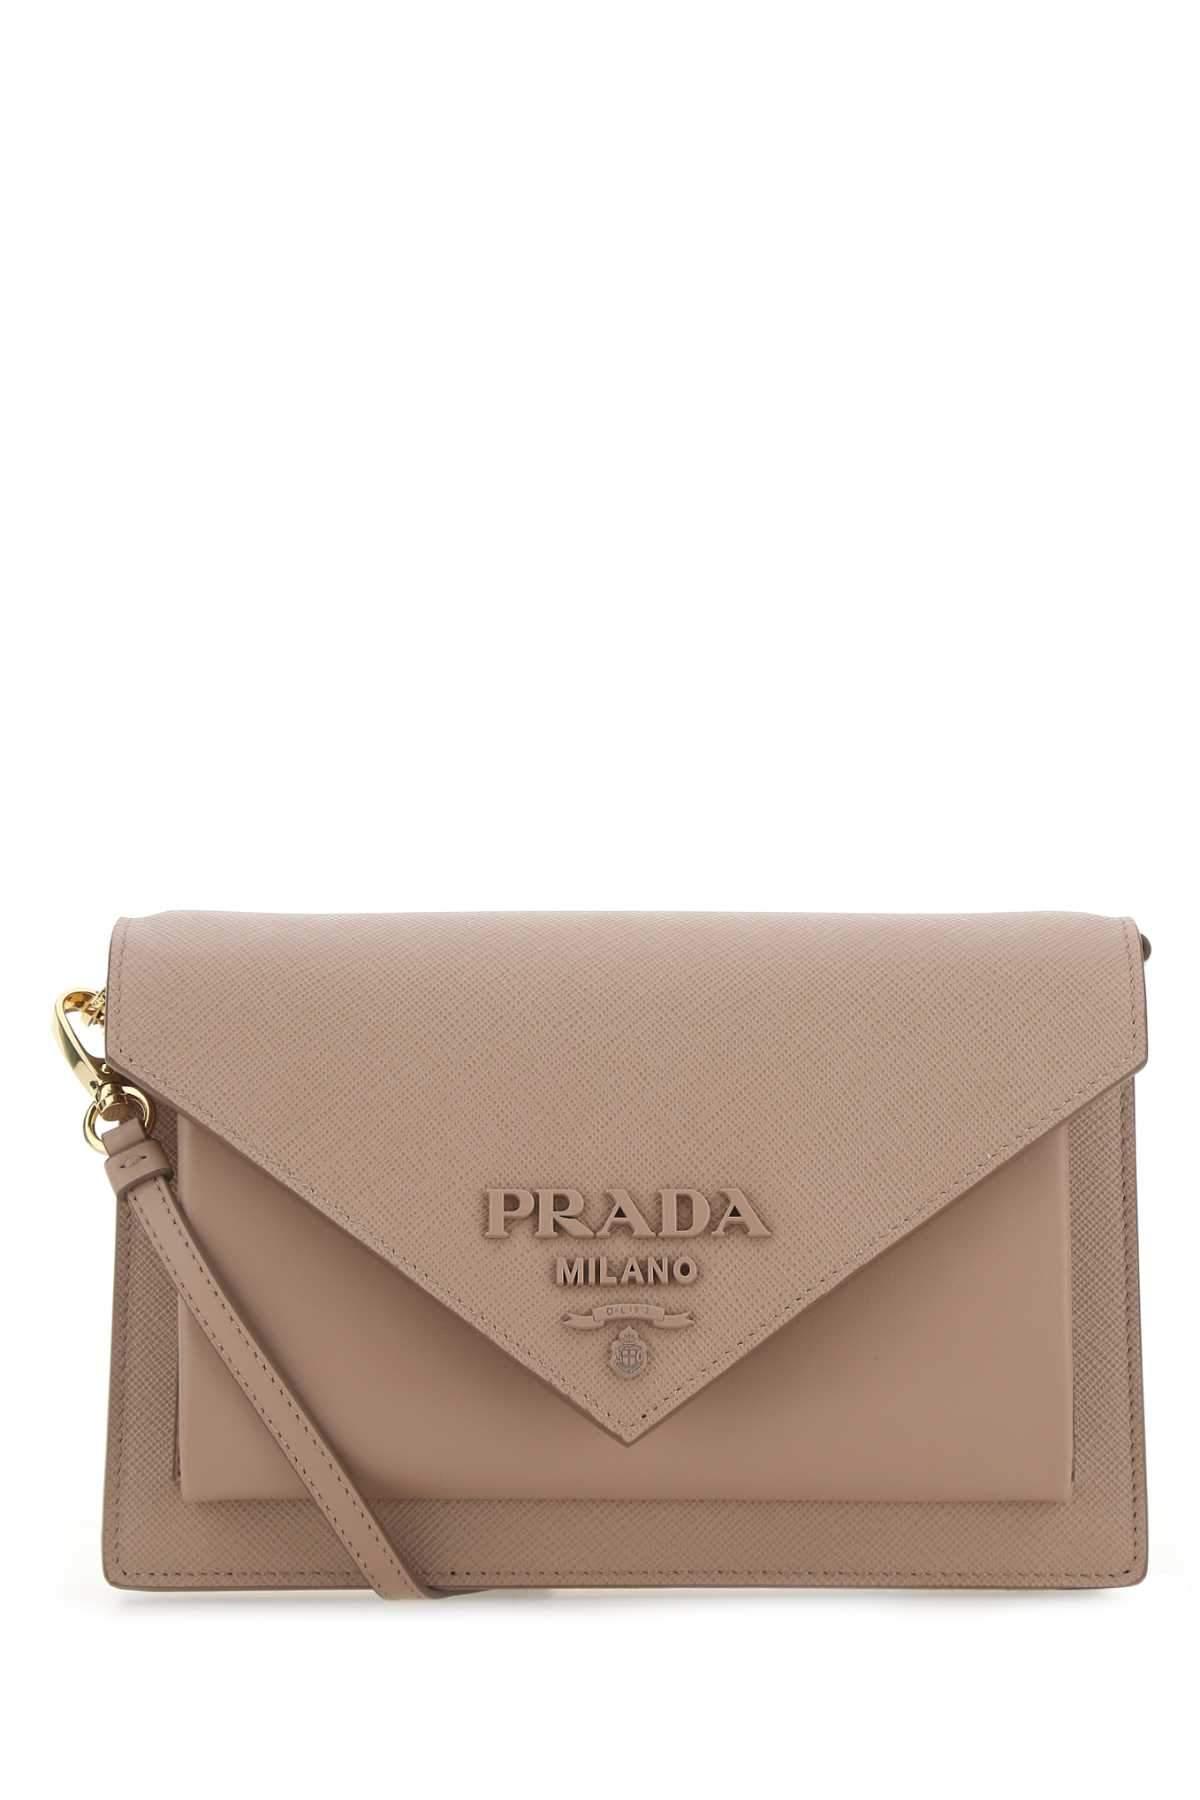 Prada Leather Logo Envelope Crossbody Bag in Beige (Natural) | Lyst